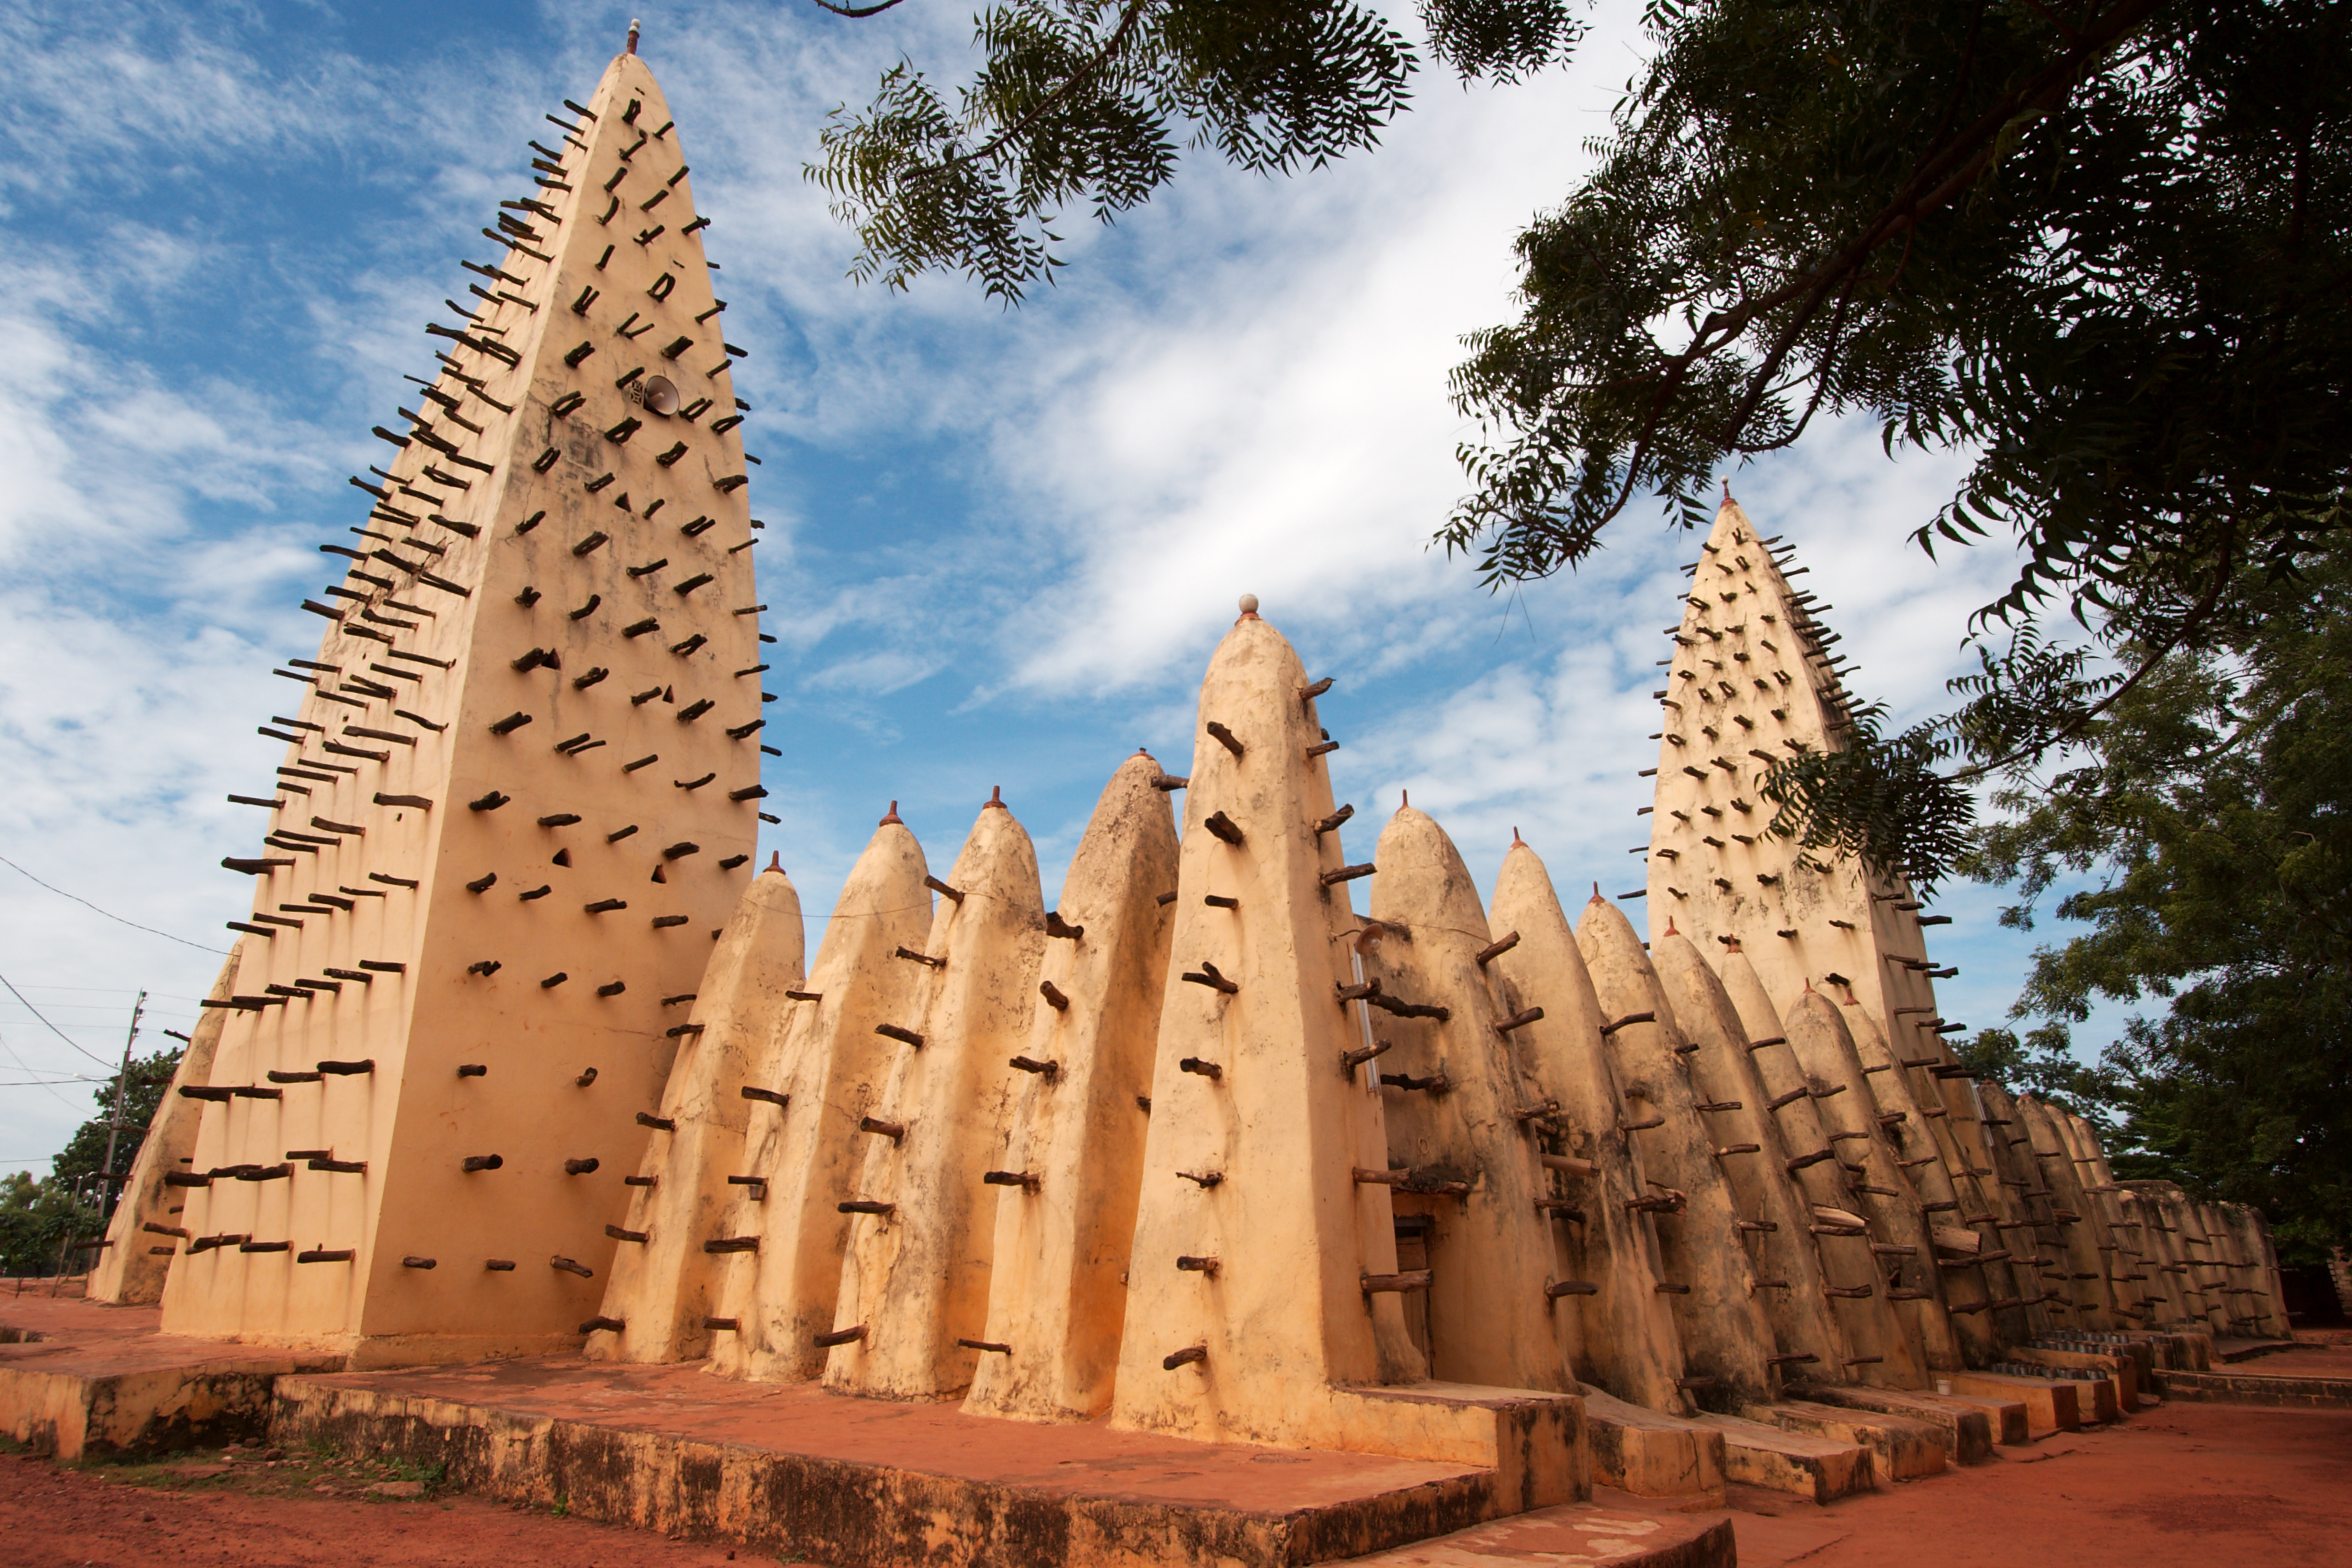 Grand Mosque of Bobo-Dioulasso - Wikipedia